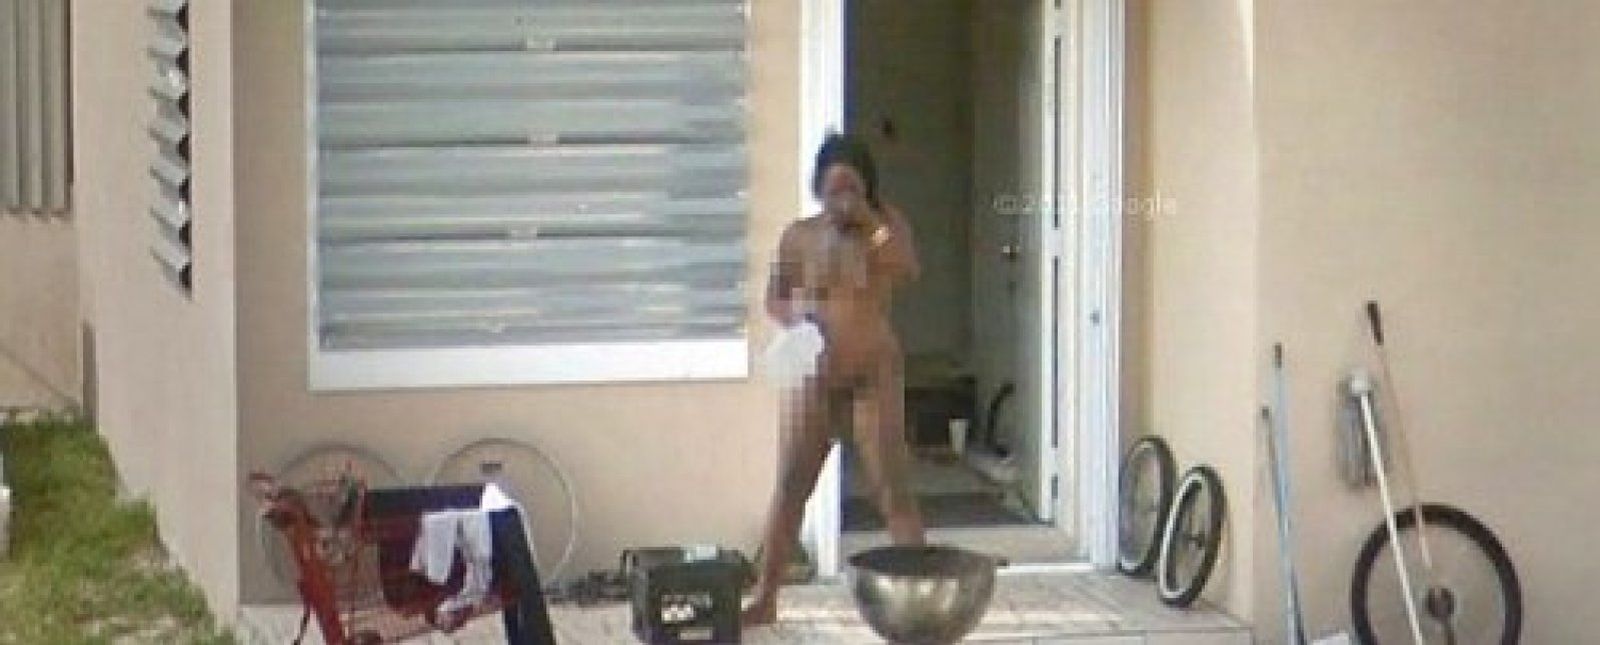 Google street view nudes